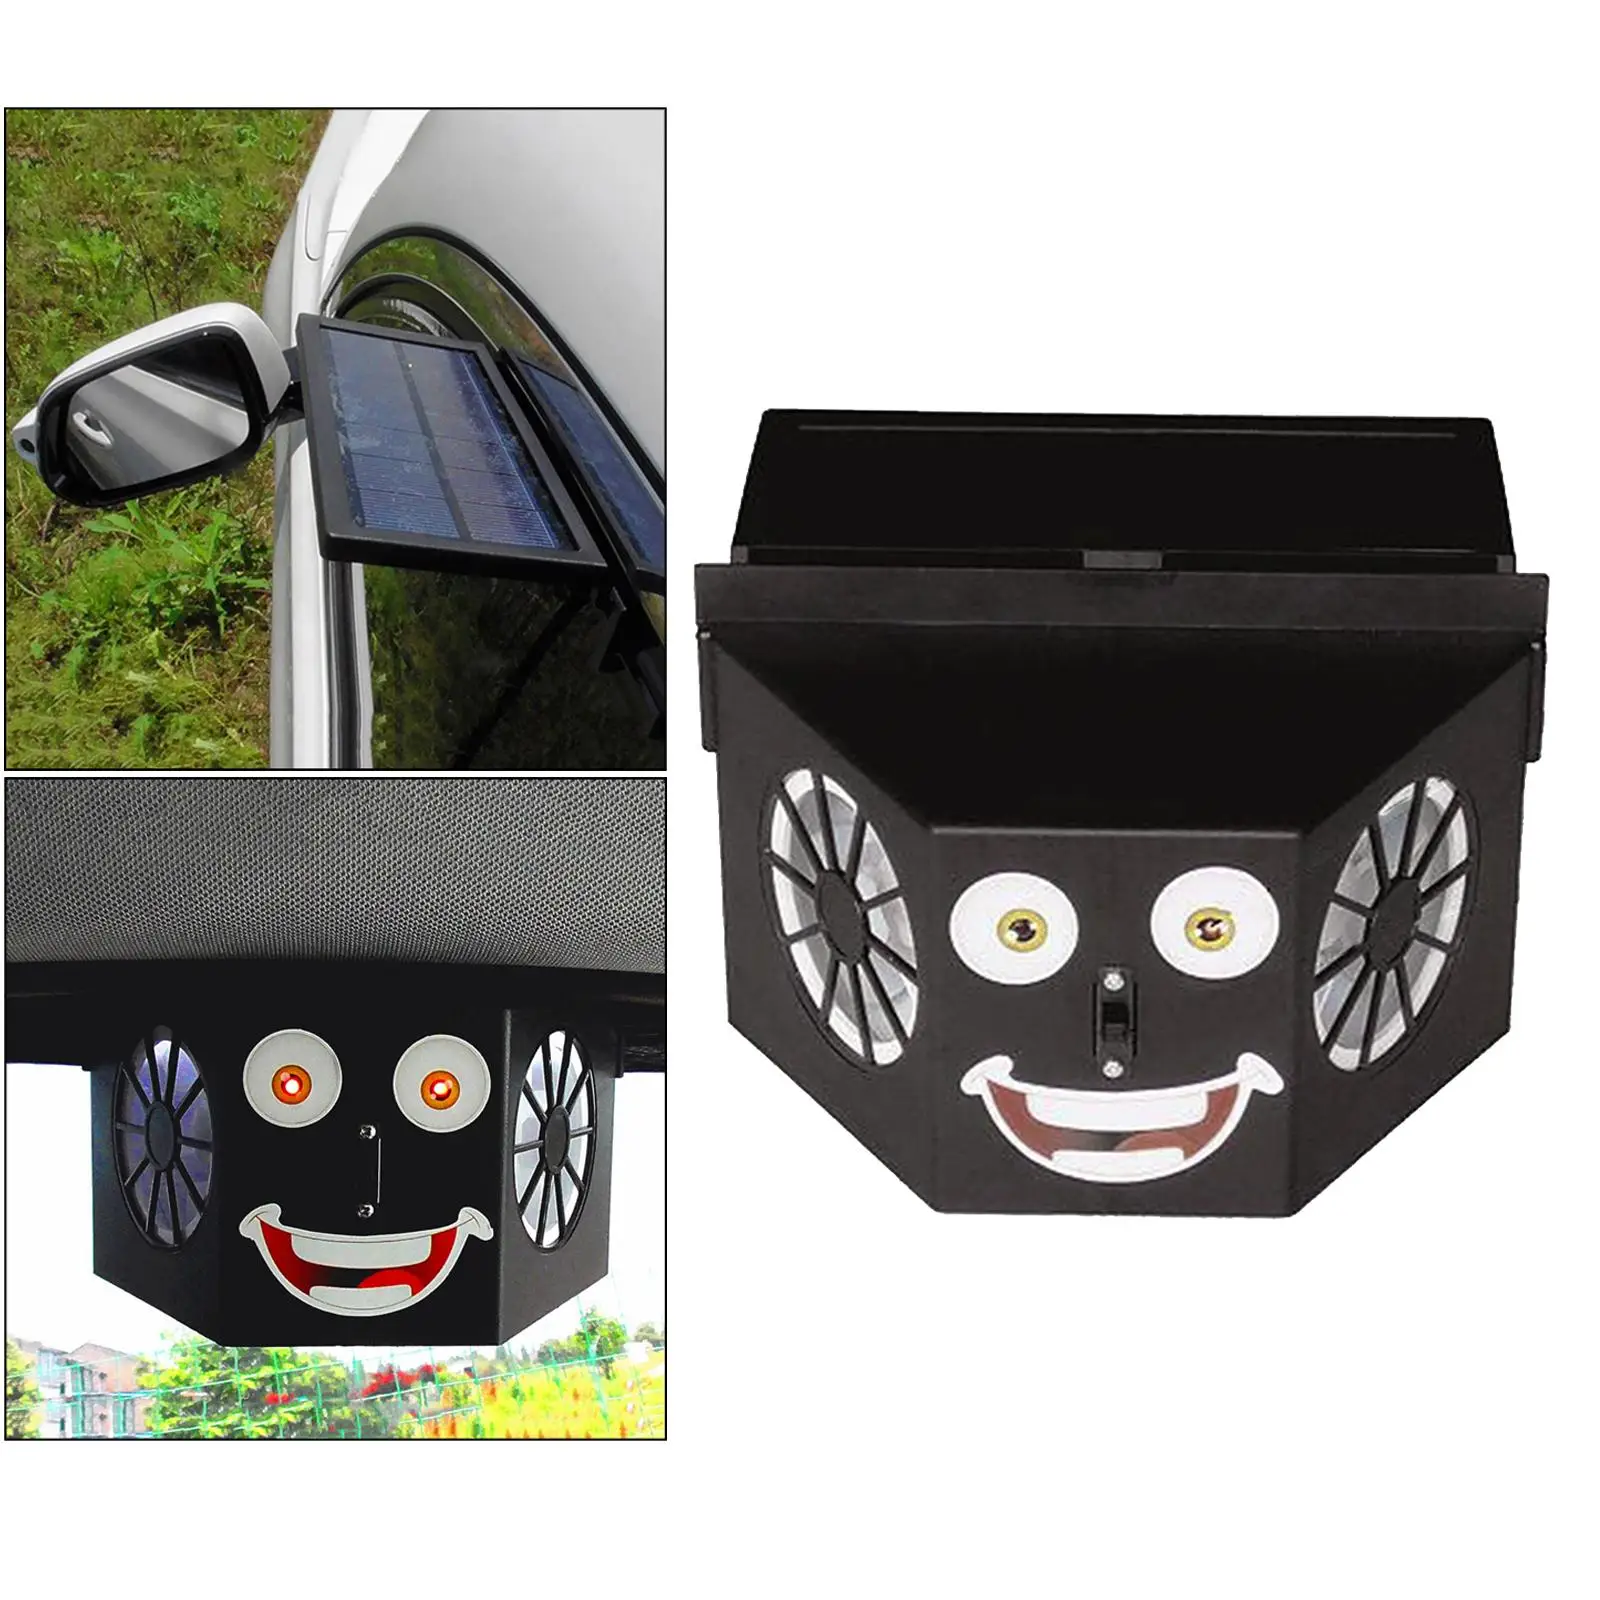 Car Ventilation Fan Solar Attic Fan ilator for Dog House RV Car Greenhouse Caravan Garage Car Cooler